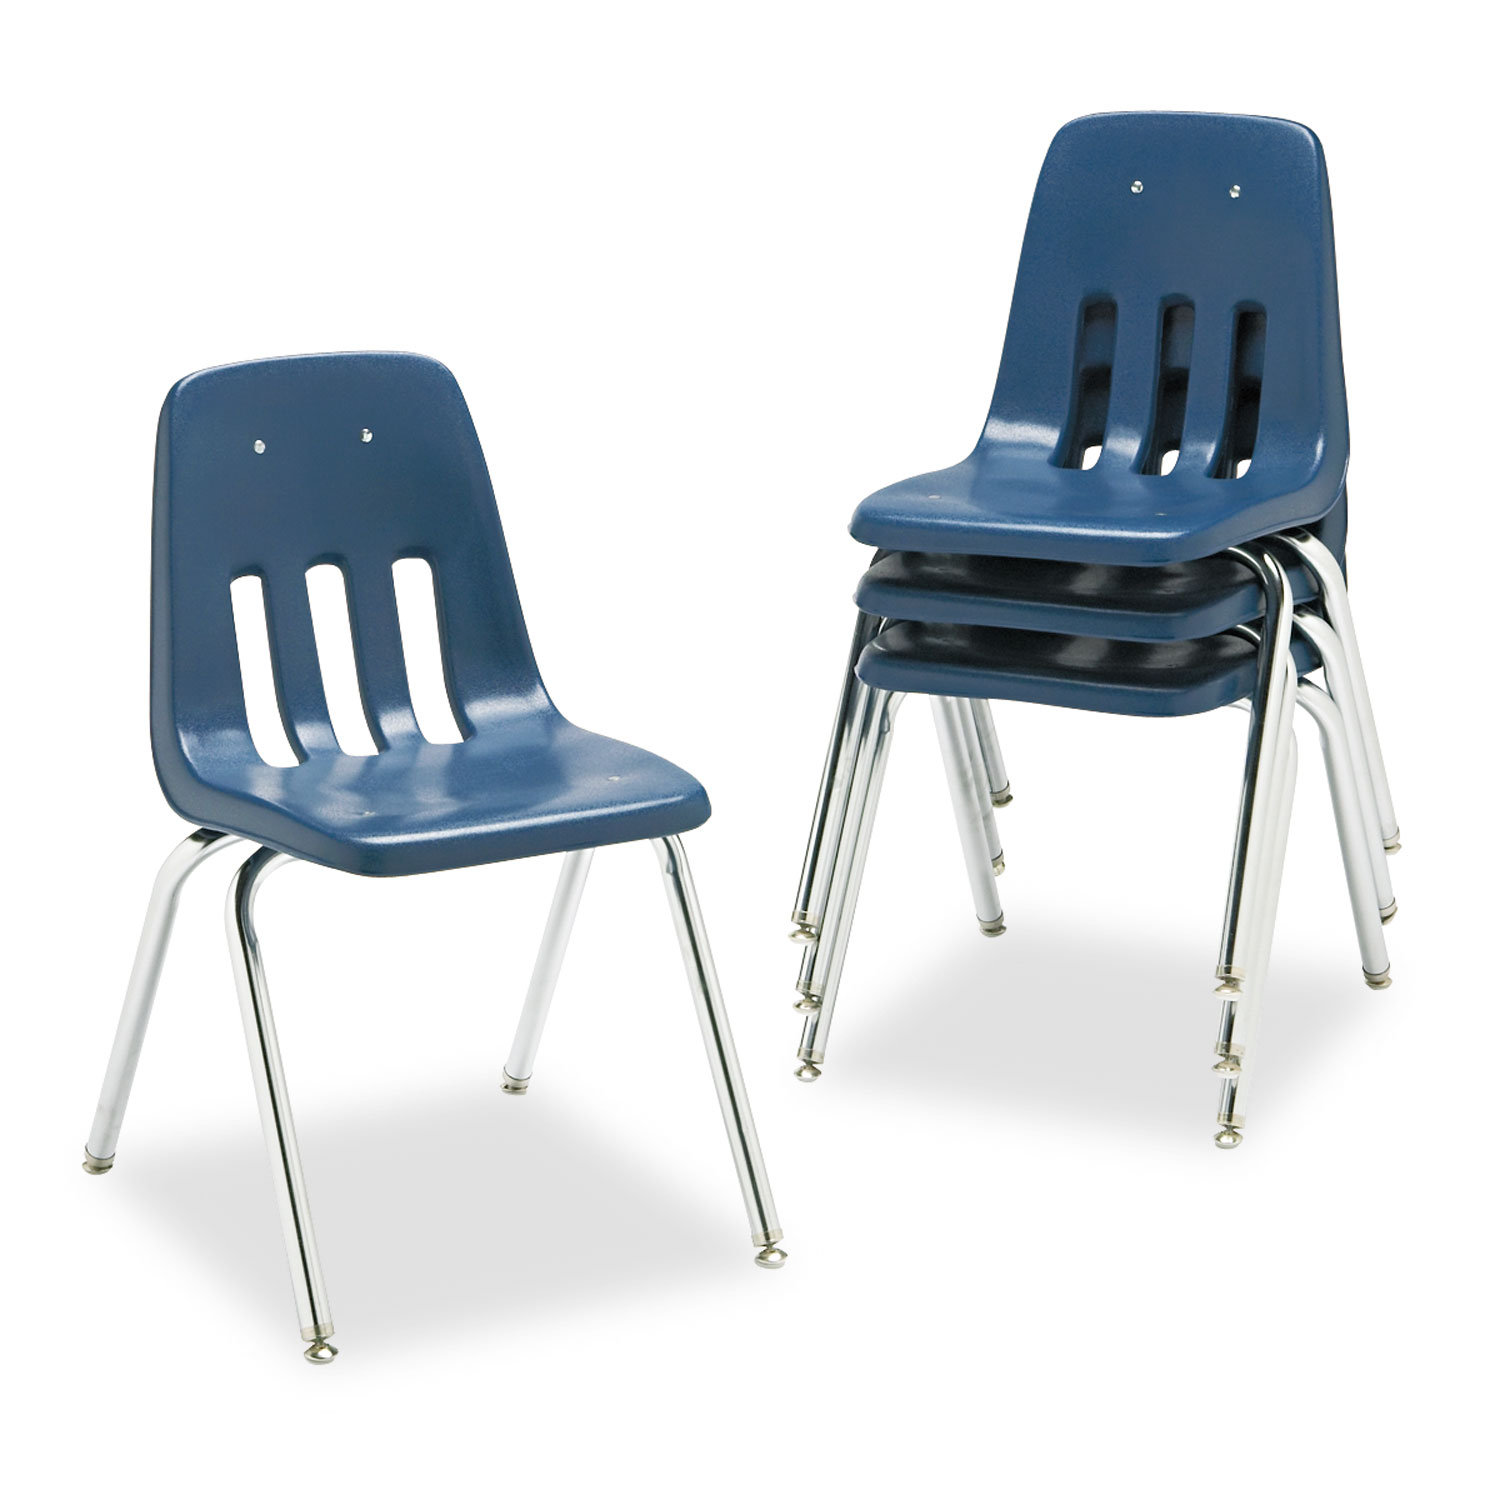 9000 Series Classroom Chair, 18 Seat Height, Navy/Chrome, 4/Carton